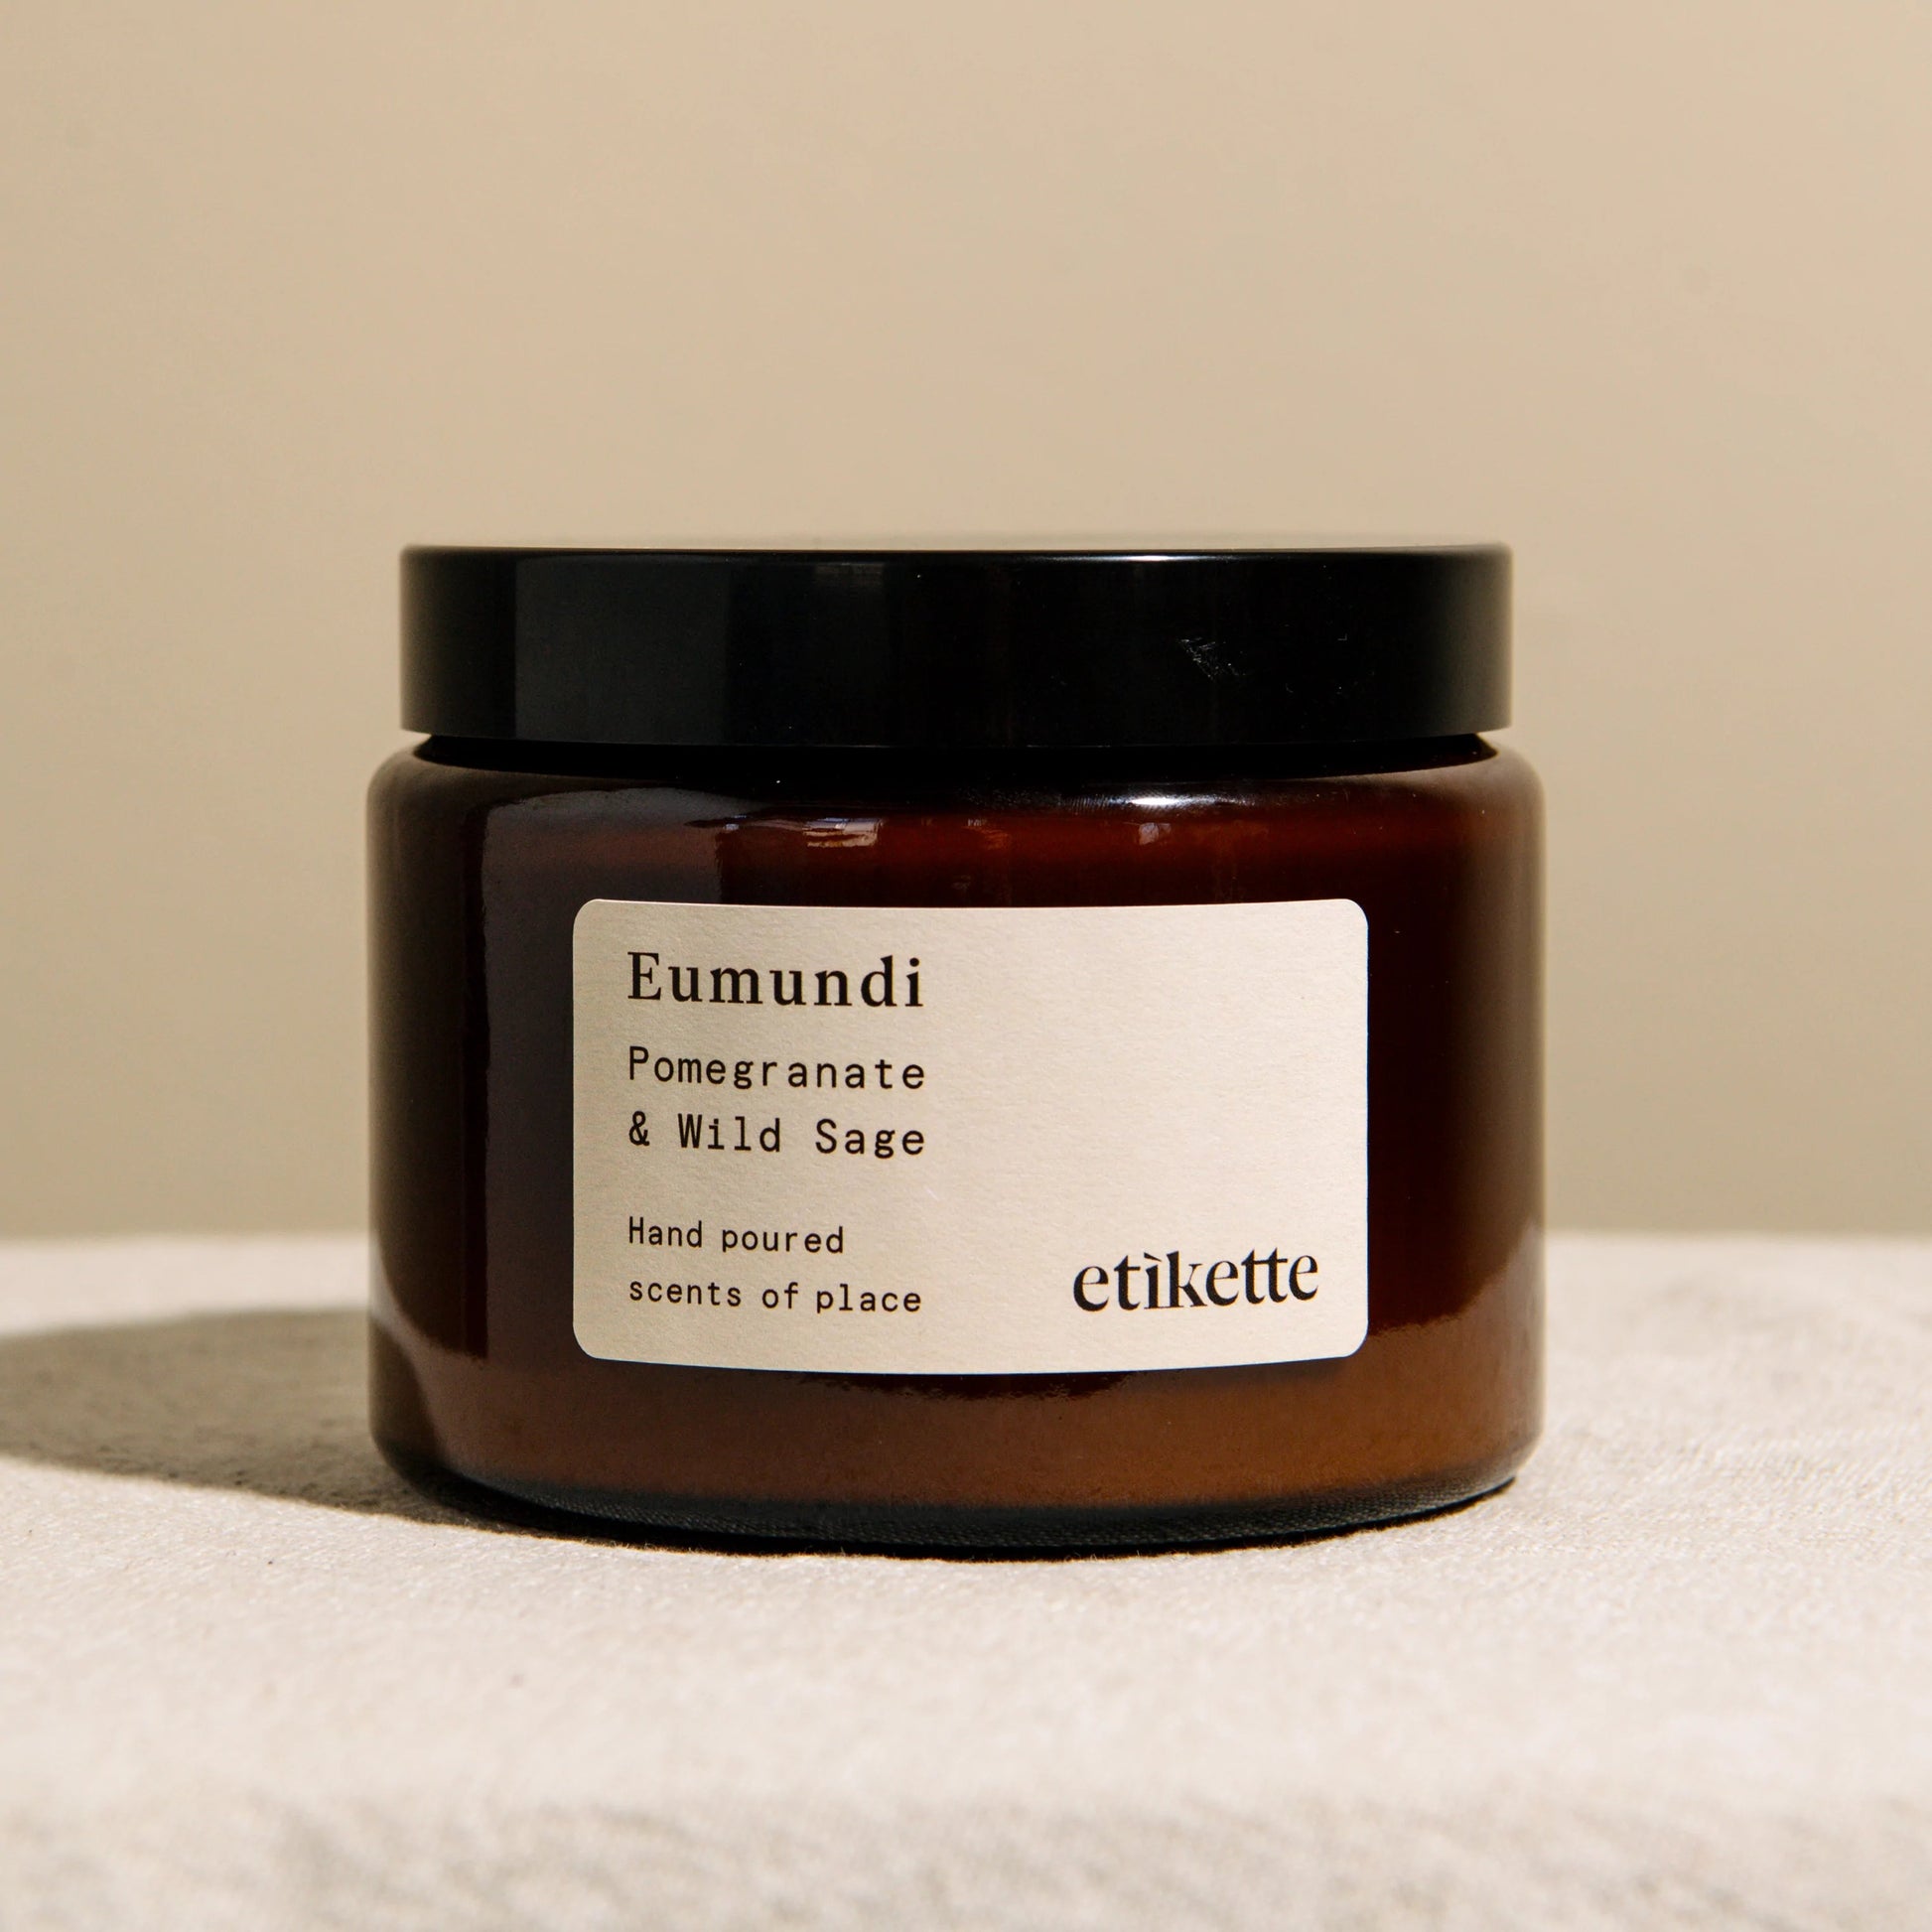 Eumundi Pomegranate & Wild Sage Double Wick Candle by Etikette - Toast and honey studio